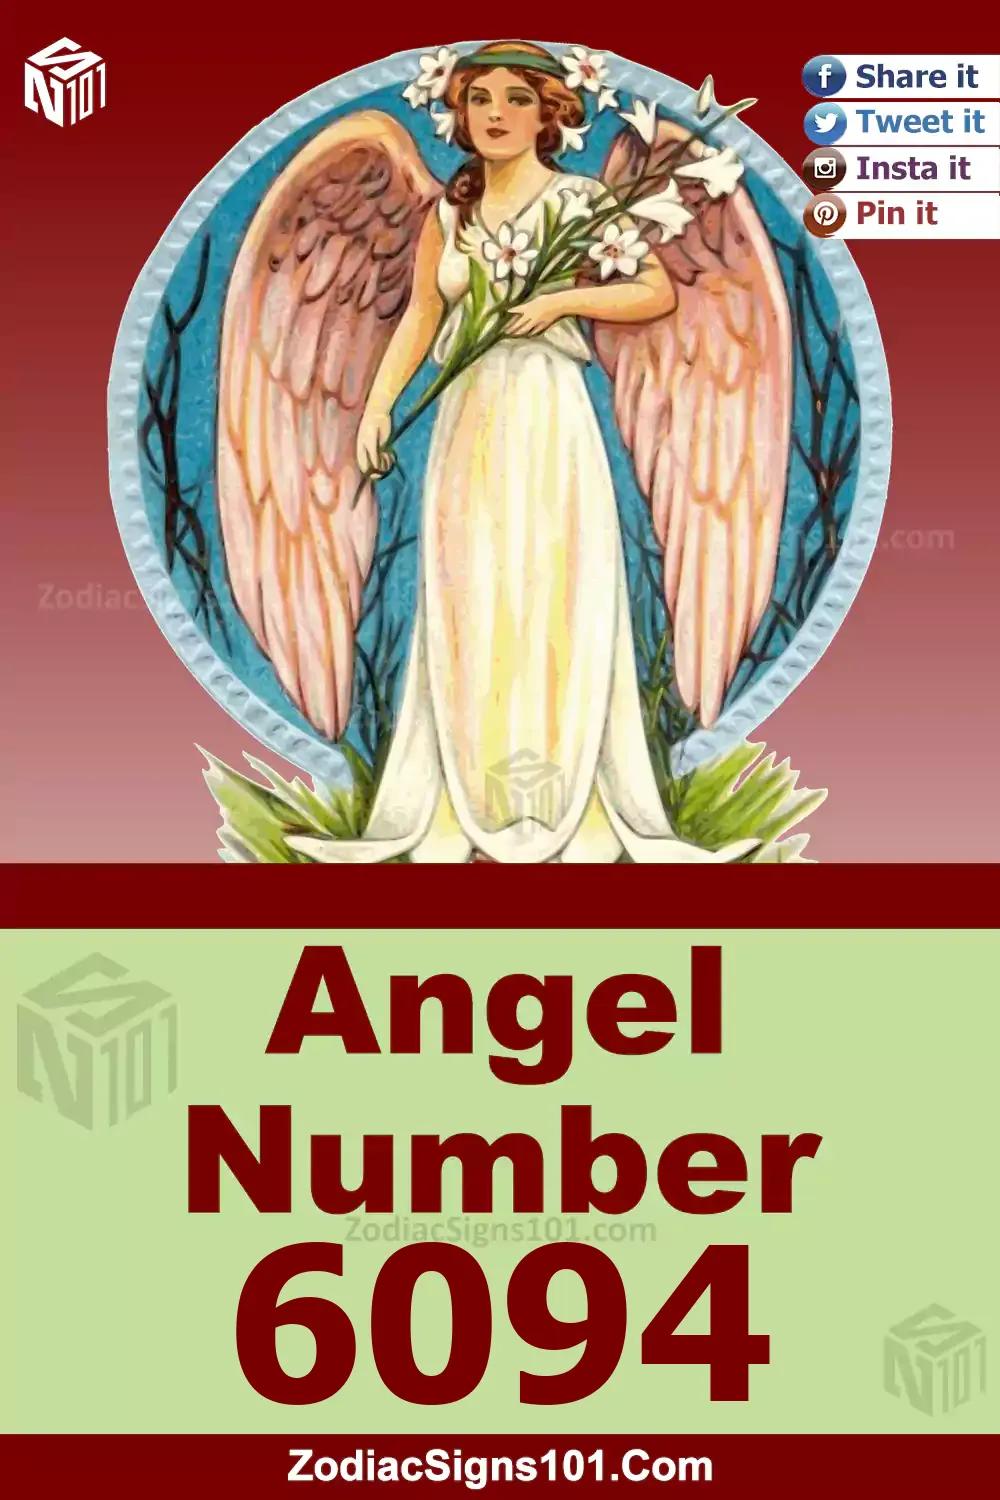 6094-Angel-Number-Meaning.jpg